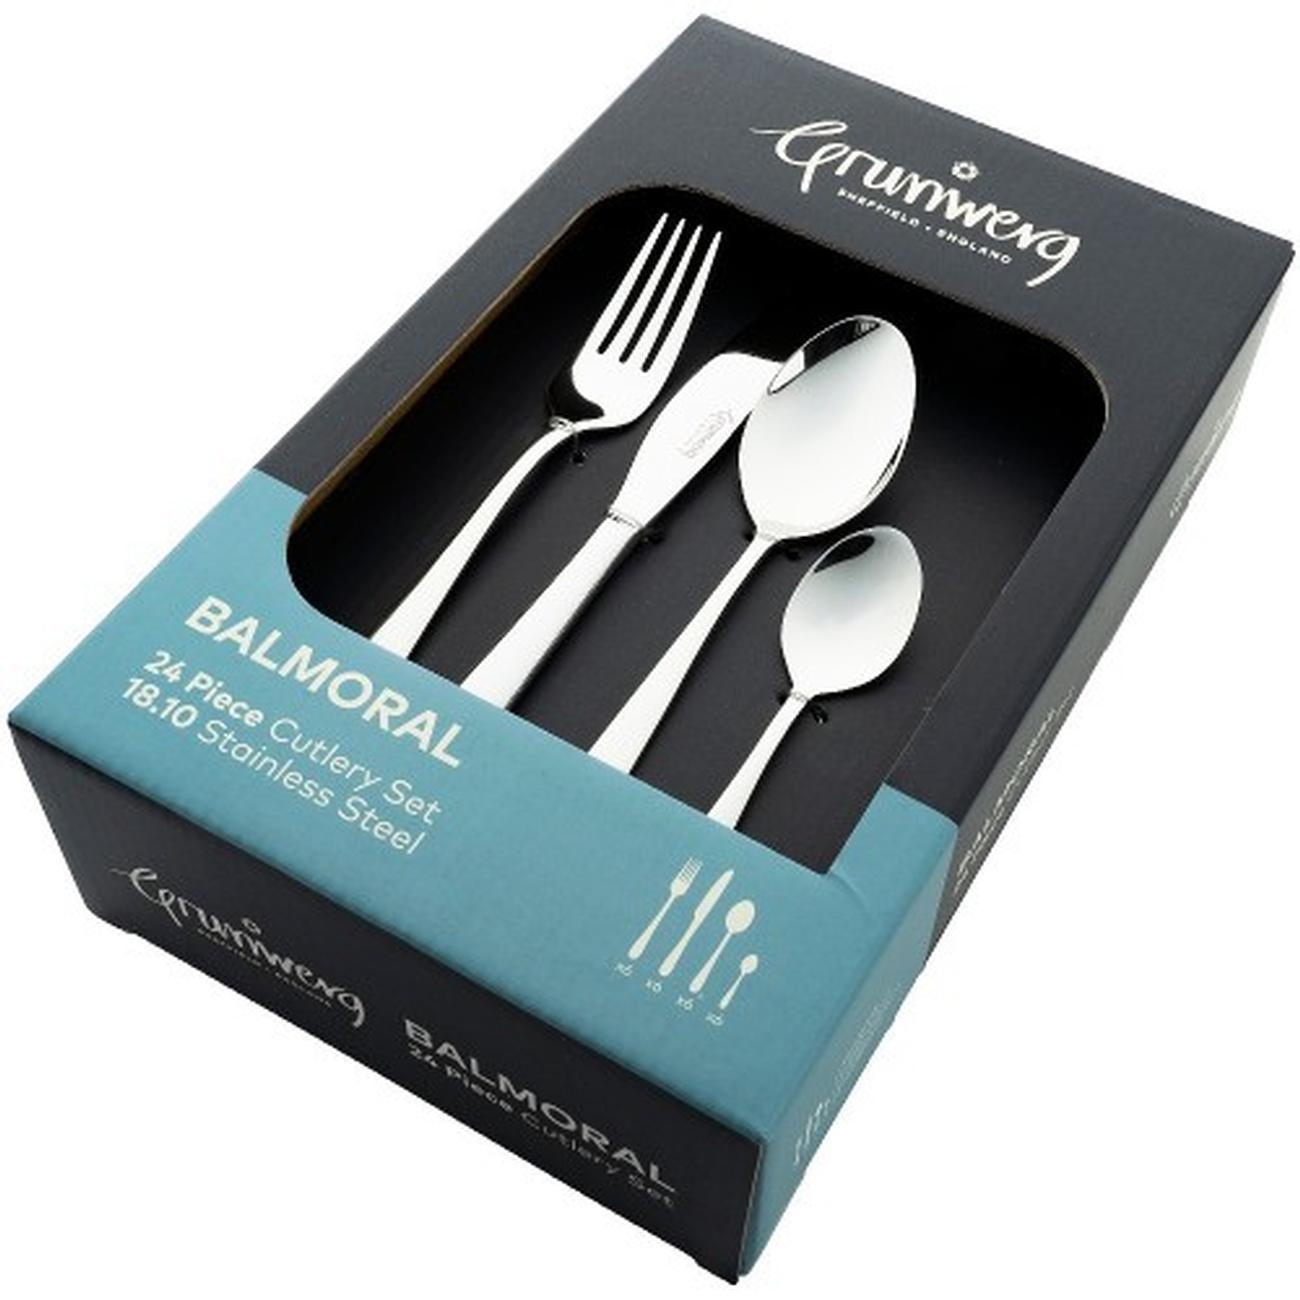 grunwerg-balmoral-cutlery-set-16pcs - Grunwerg Balmoral Cutlery Set 16pcs 